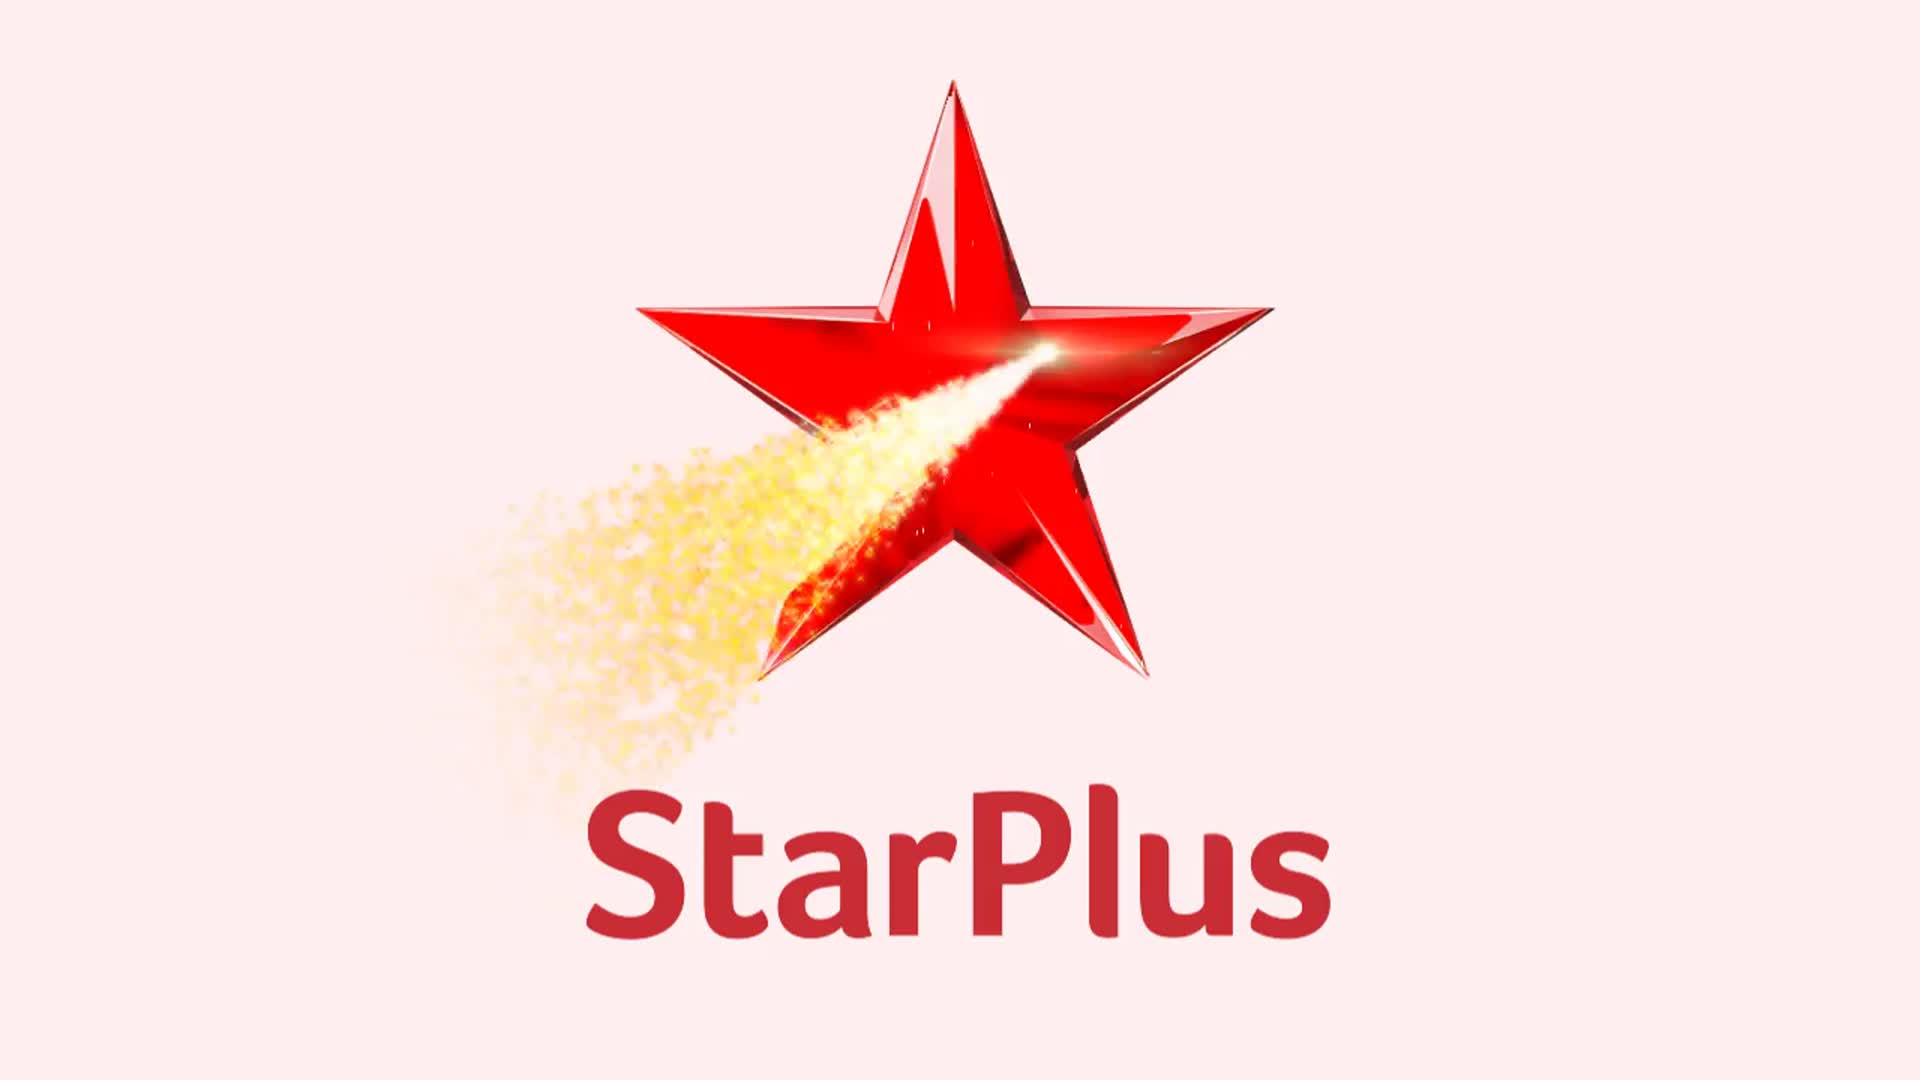 Premium Vector | Medical star plus logo design inspiration and business card